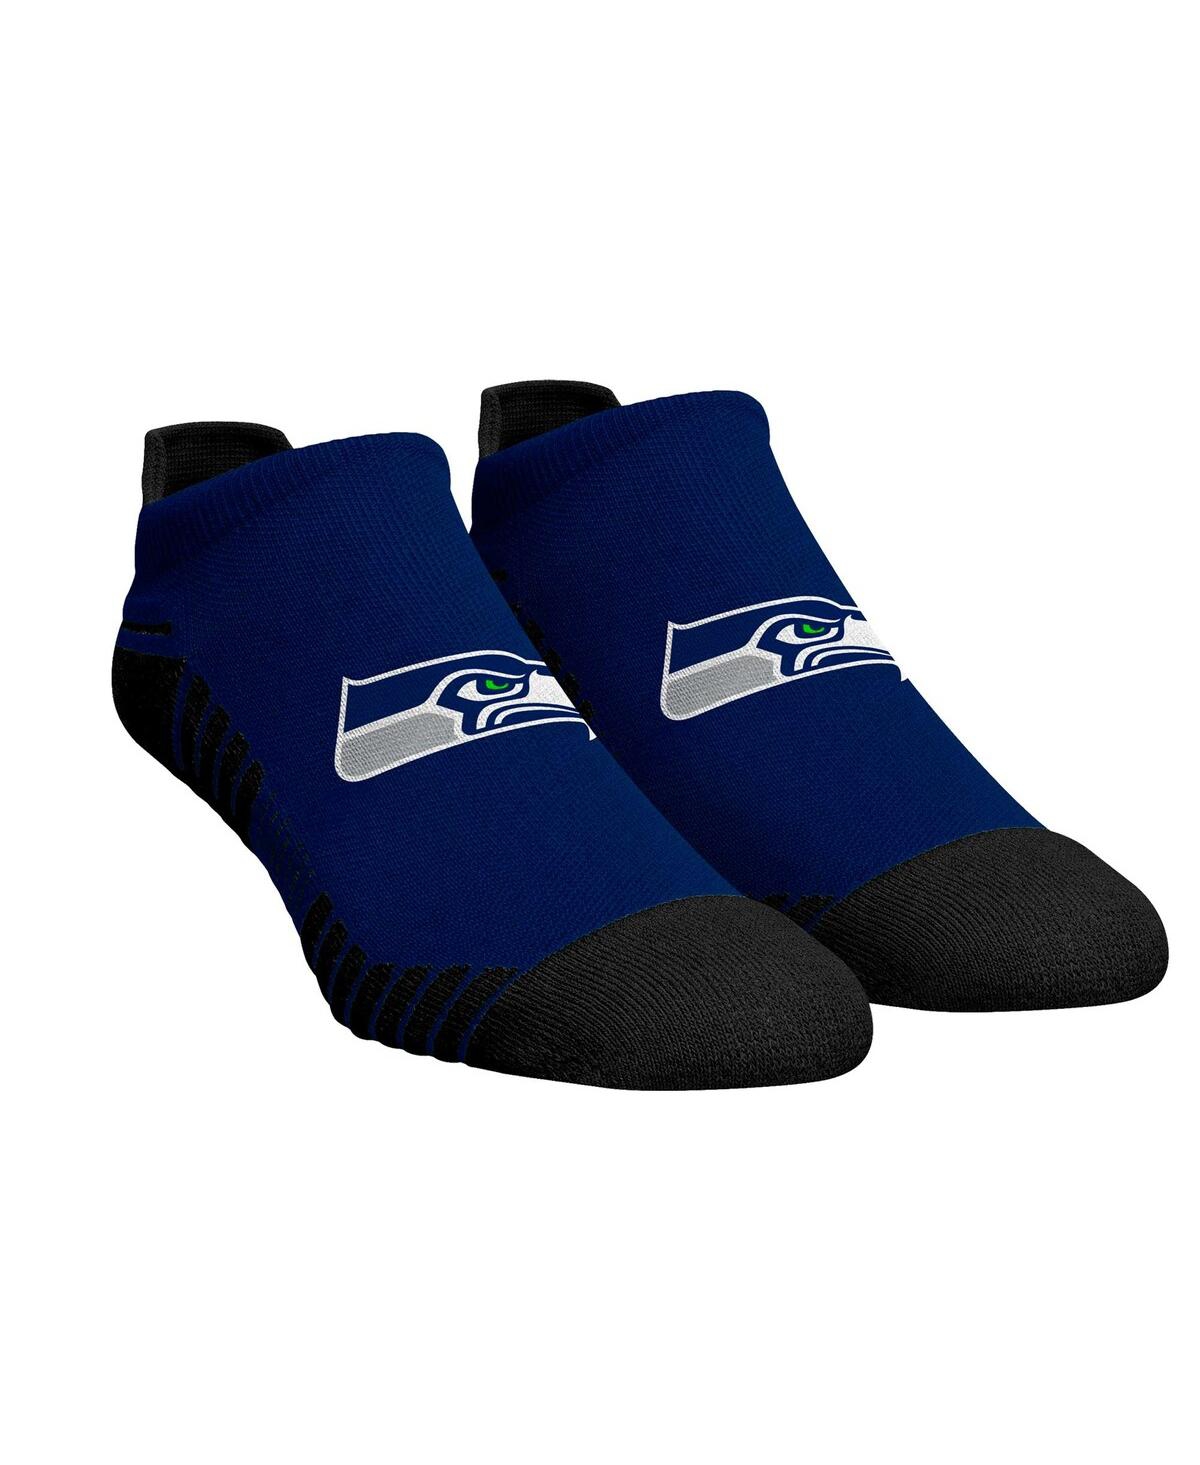 Men's and Women's Rock 'Em Socks Seattle Seahawks Hex Performance Ankle Socks - Blue, Black